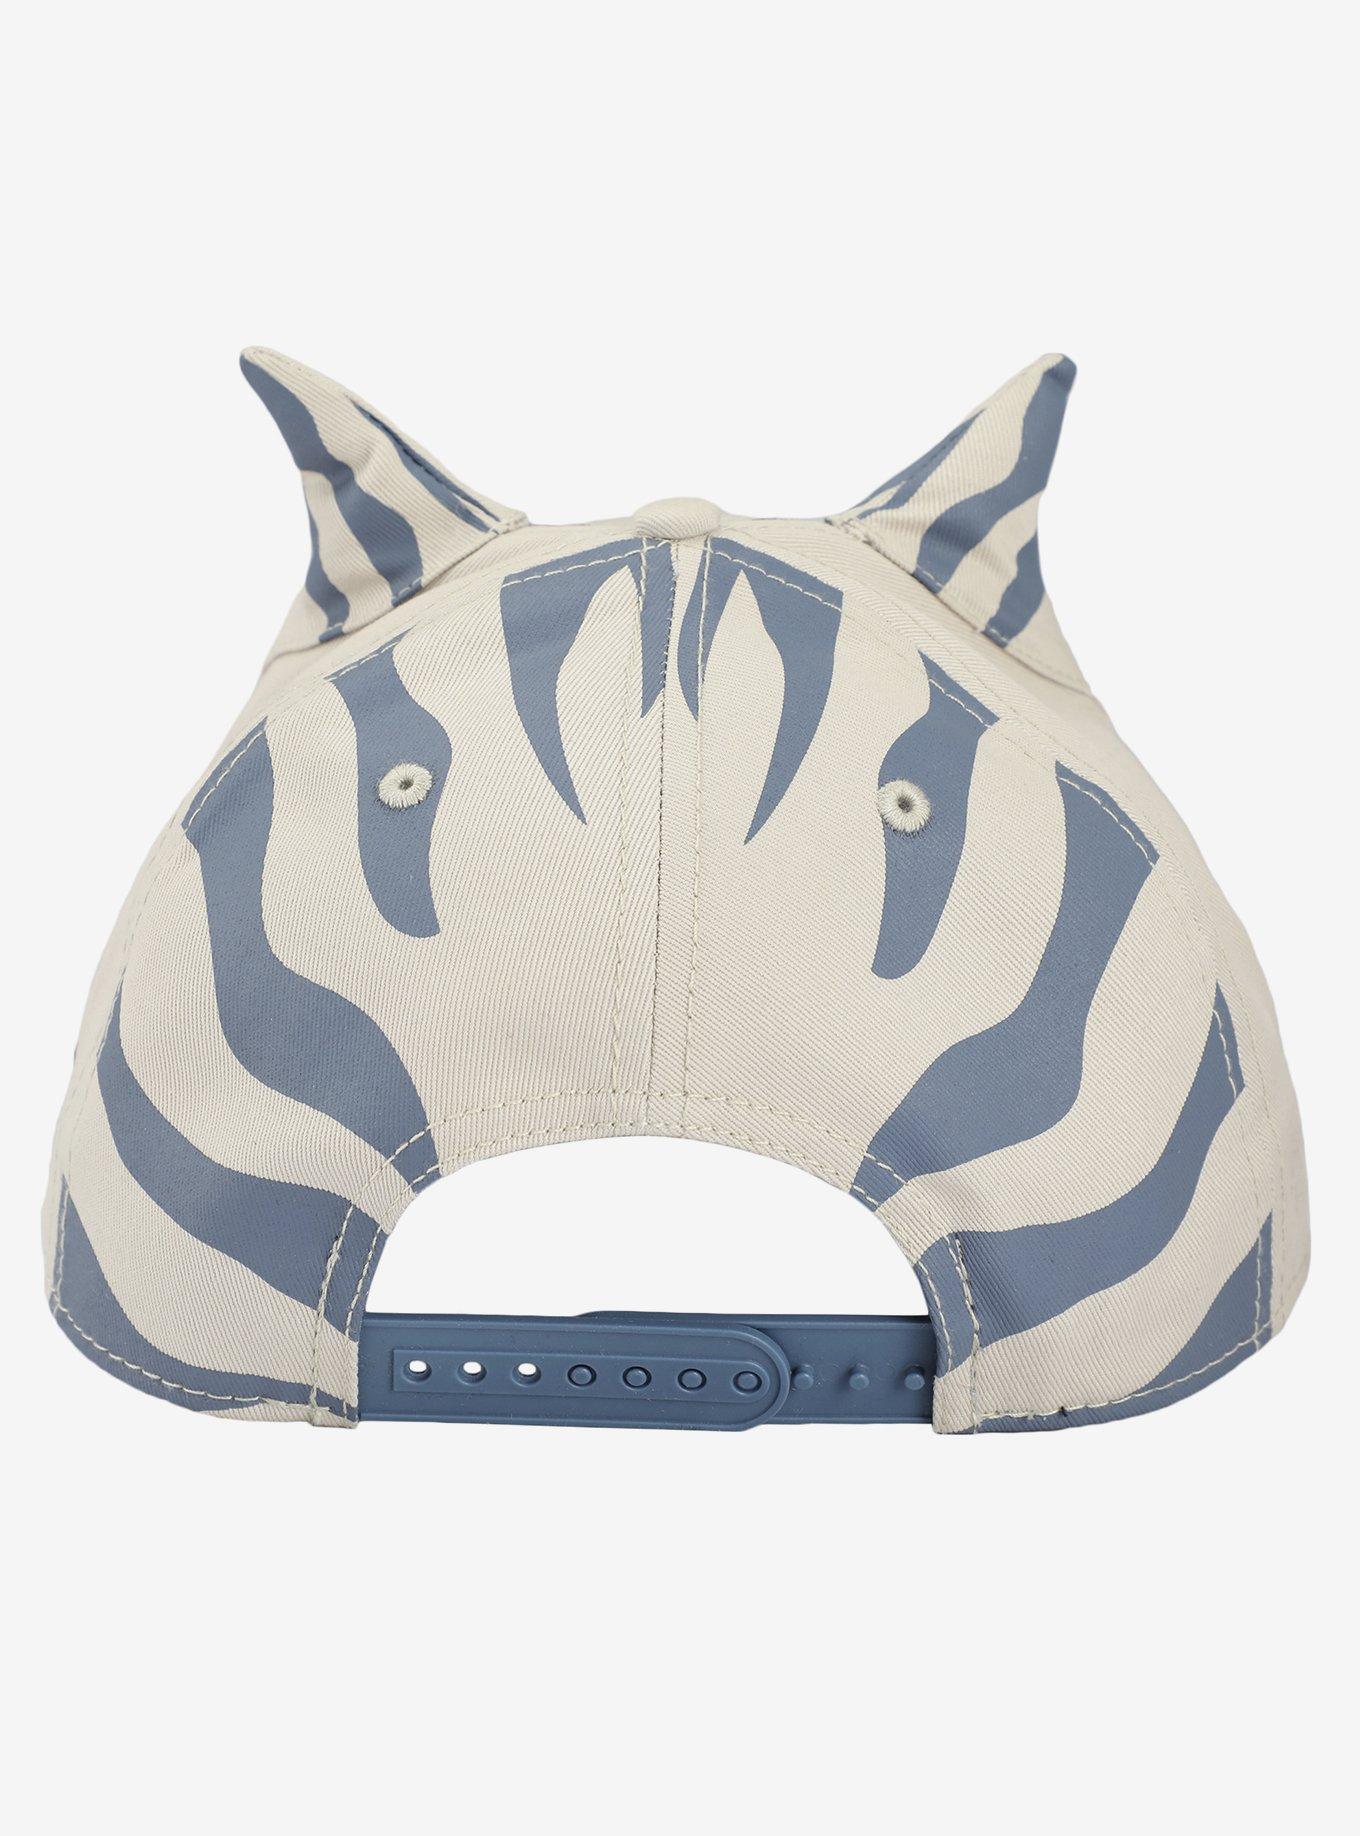 Star Wars Ahsoka Tano Snapback Hat, , alternate